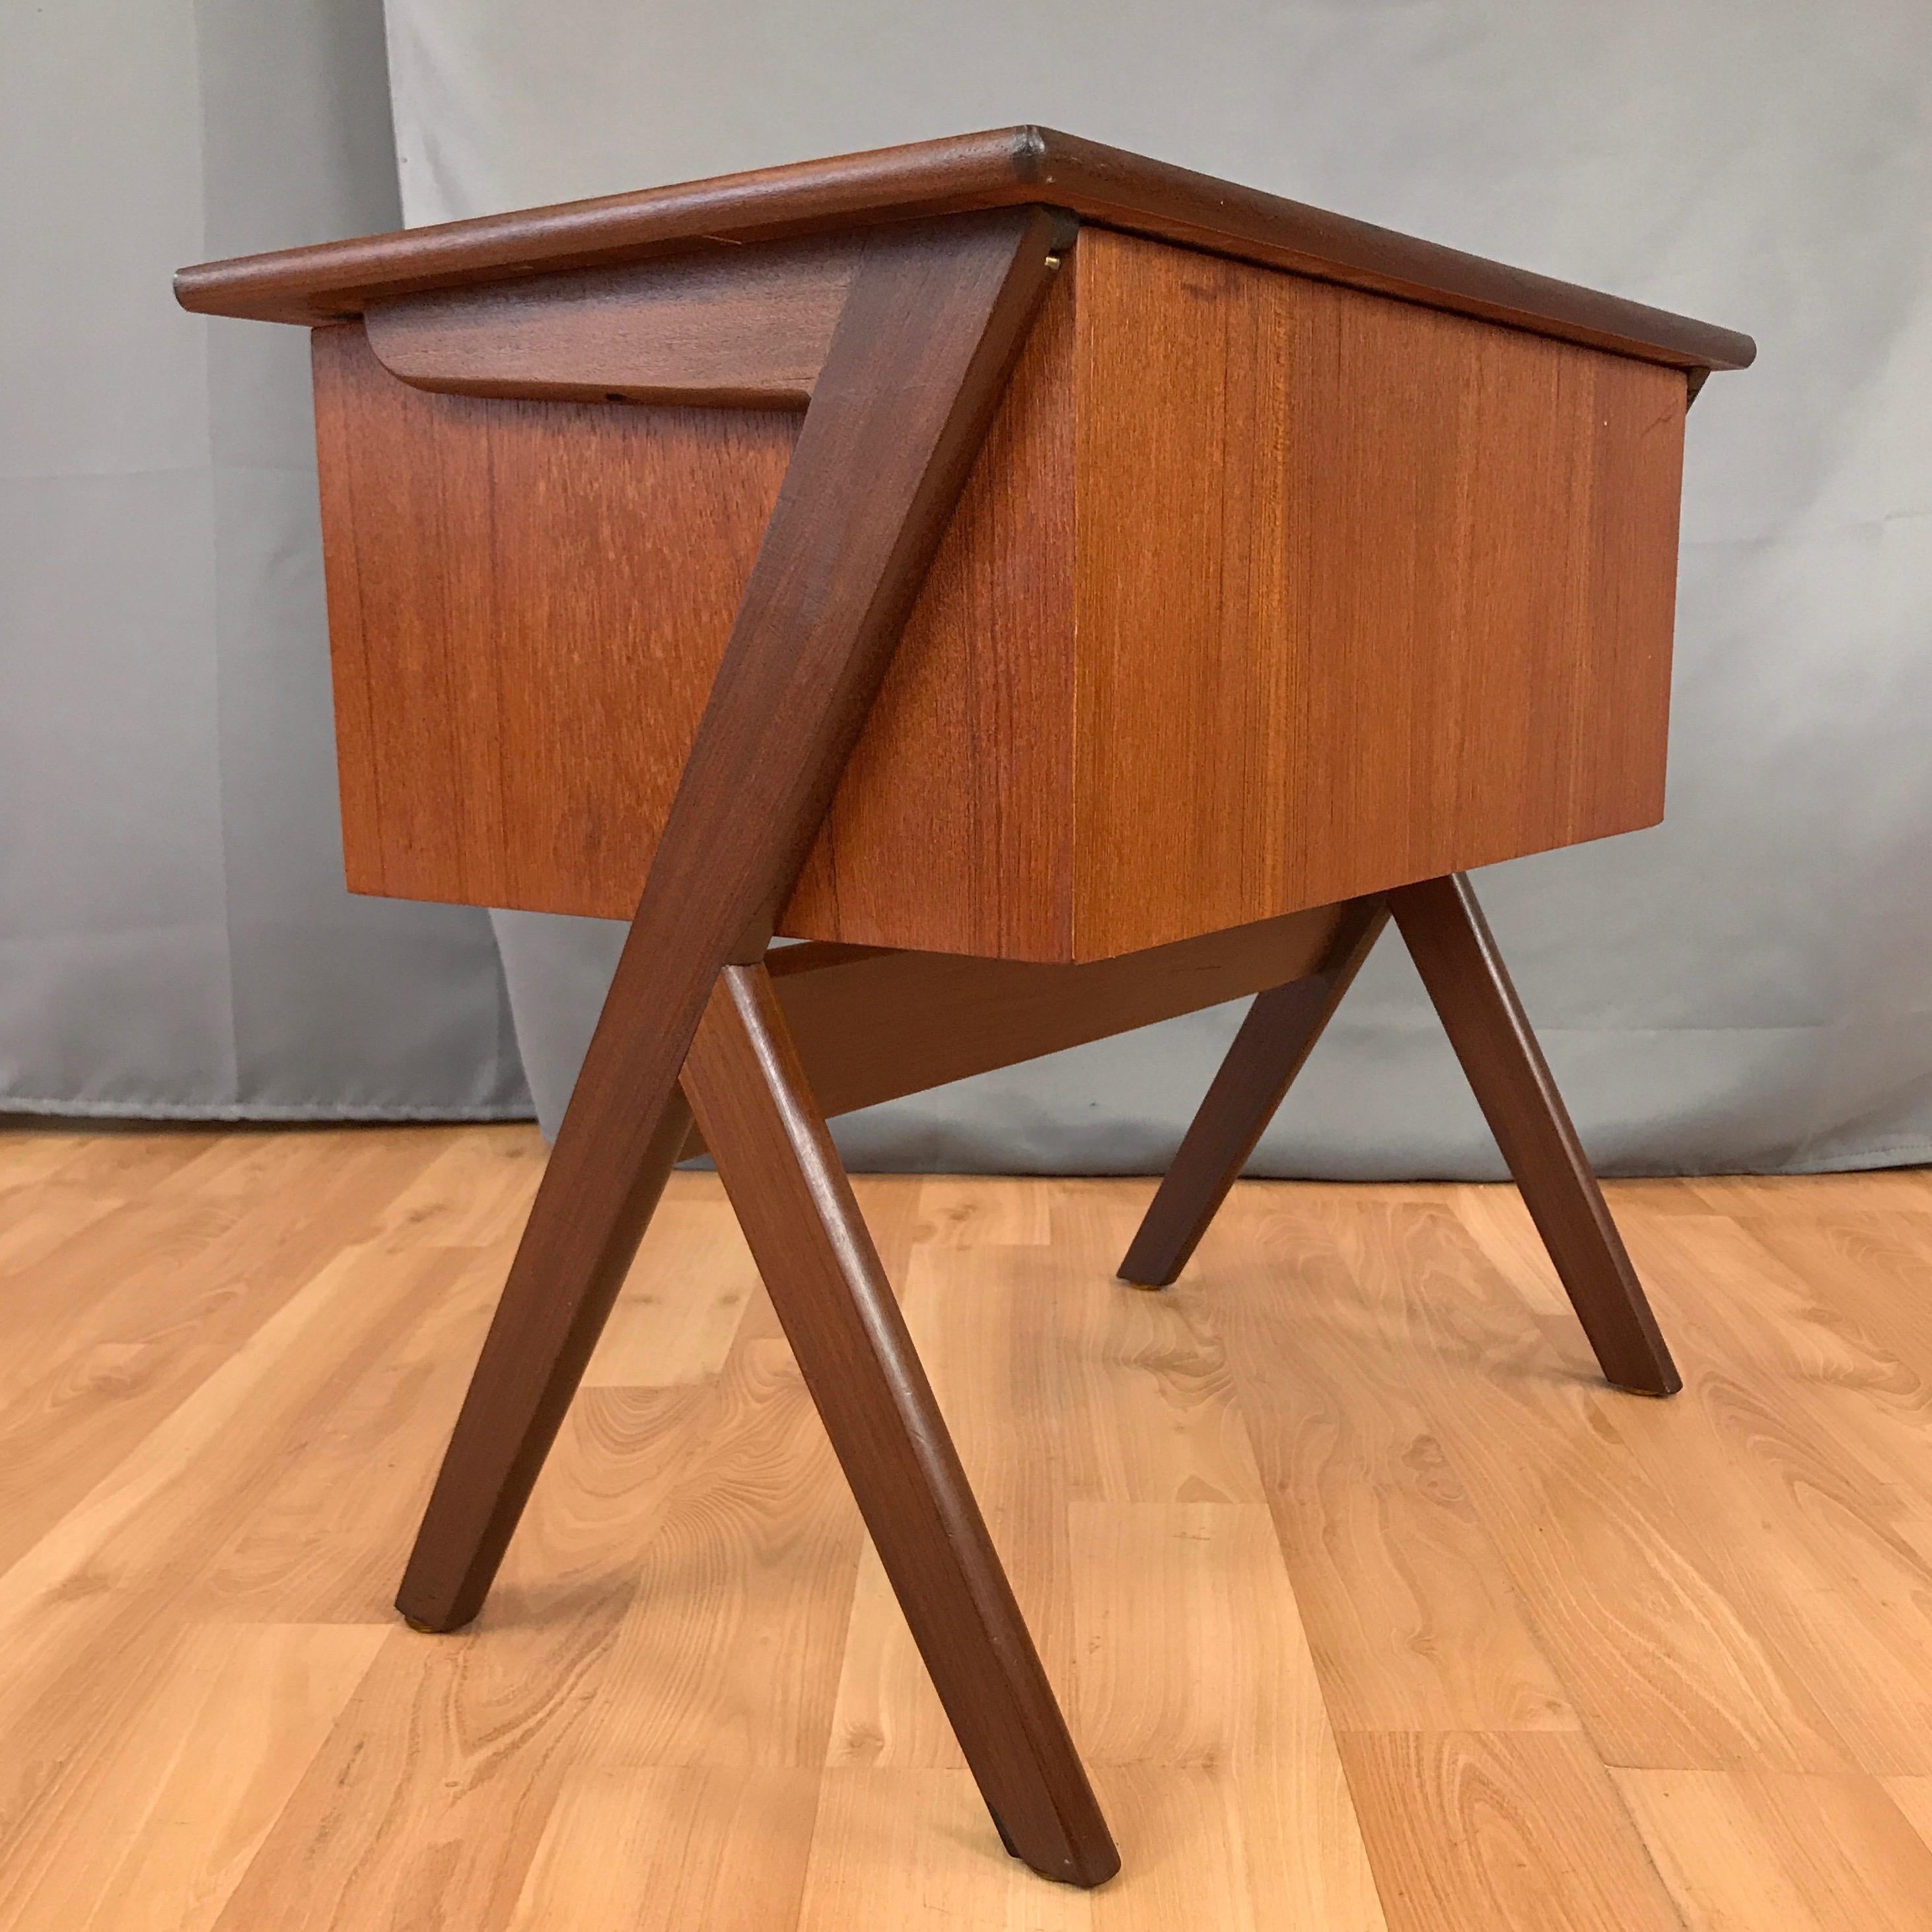 Midcentury Danish Modern Teak Sewing Box Table 1